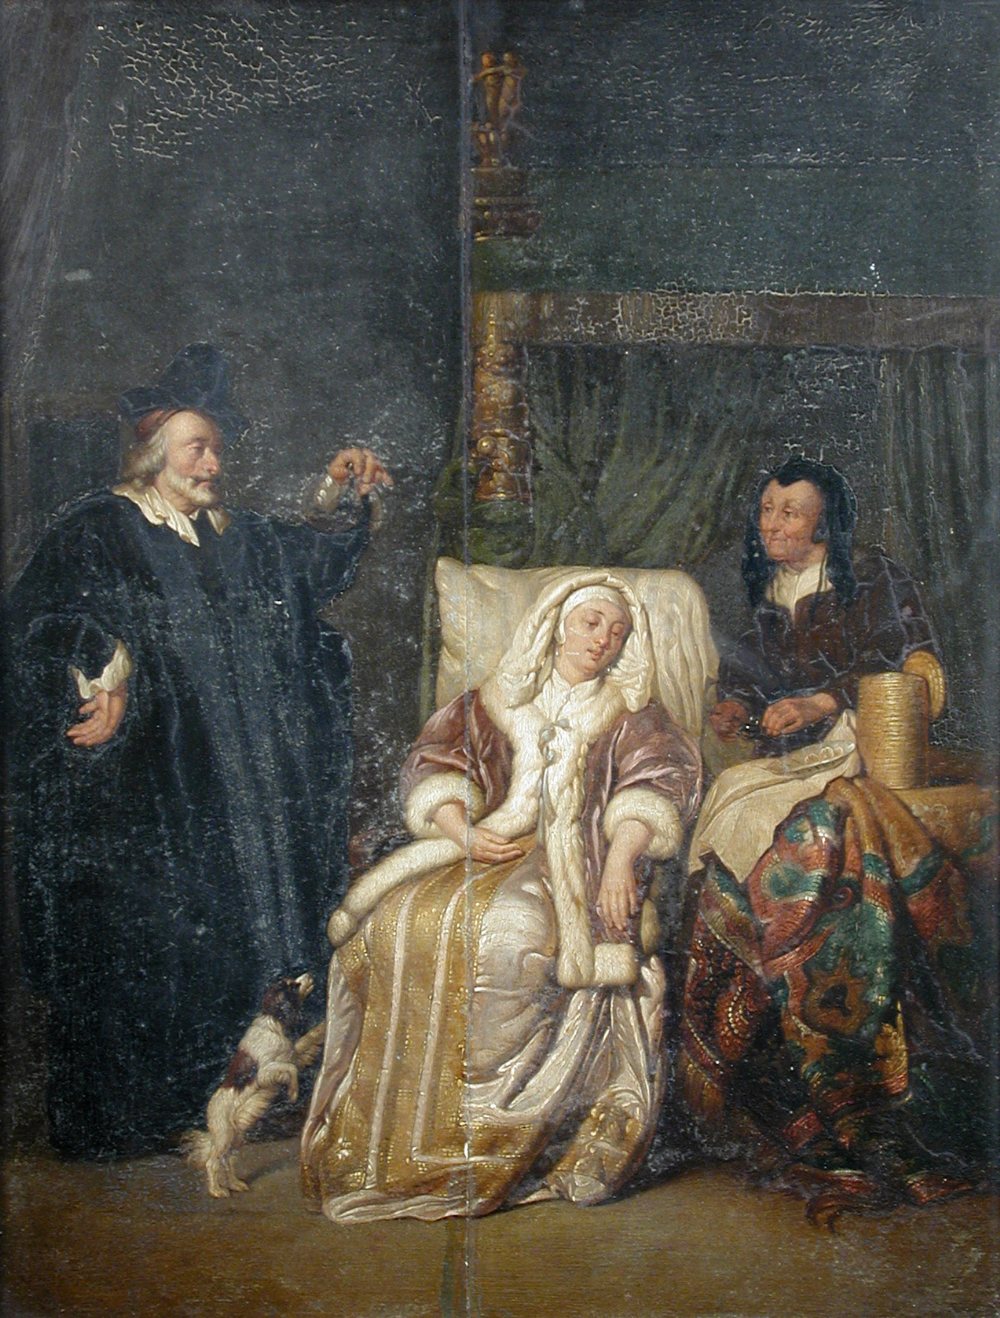 Pieter Cornelisz van Slingelandt (Dutch, 1640-1691) after Gabriel Metsu (Dutch, 1629-1667) The